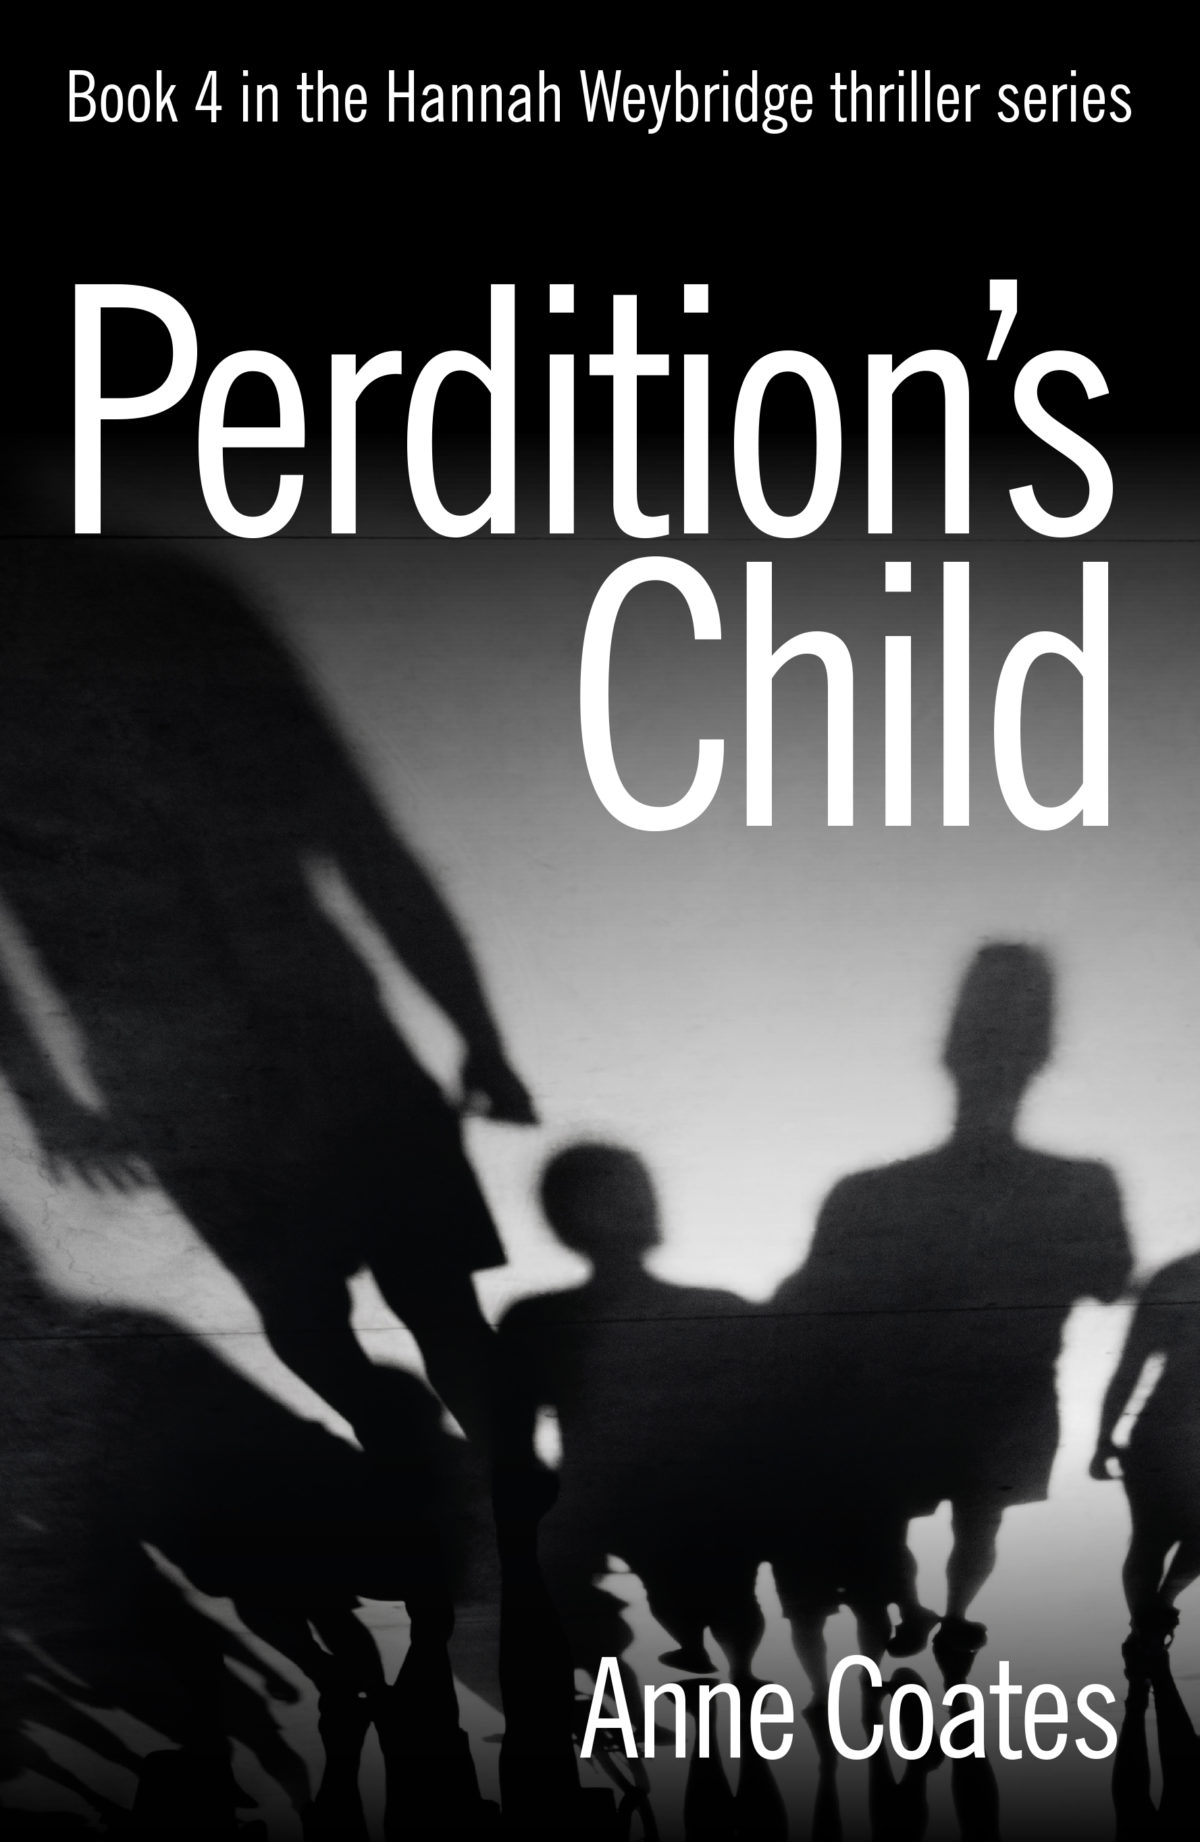 Anne Coates Perdition's Child book cover